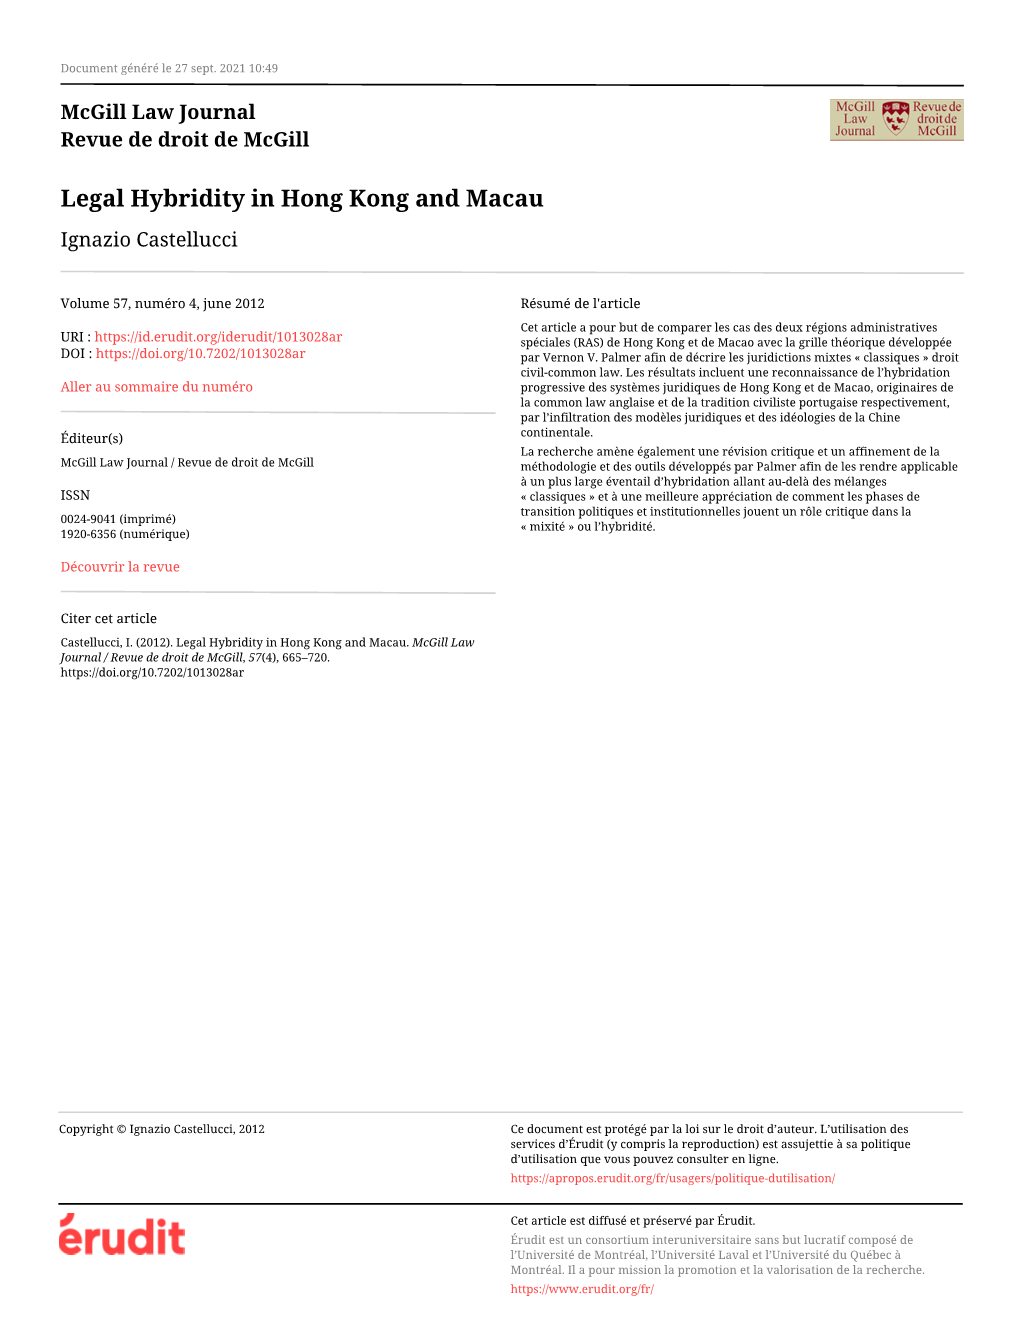 Legal Hybridity in Hong Kong and Macau Ignazio Castellucci